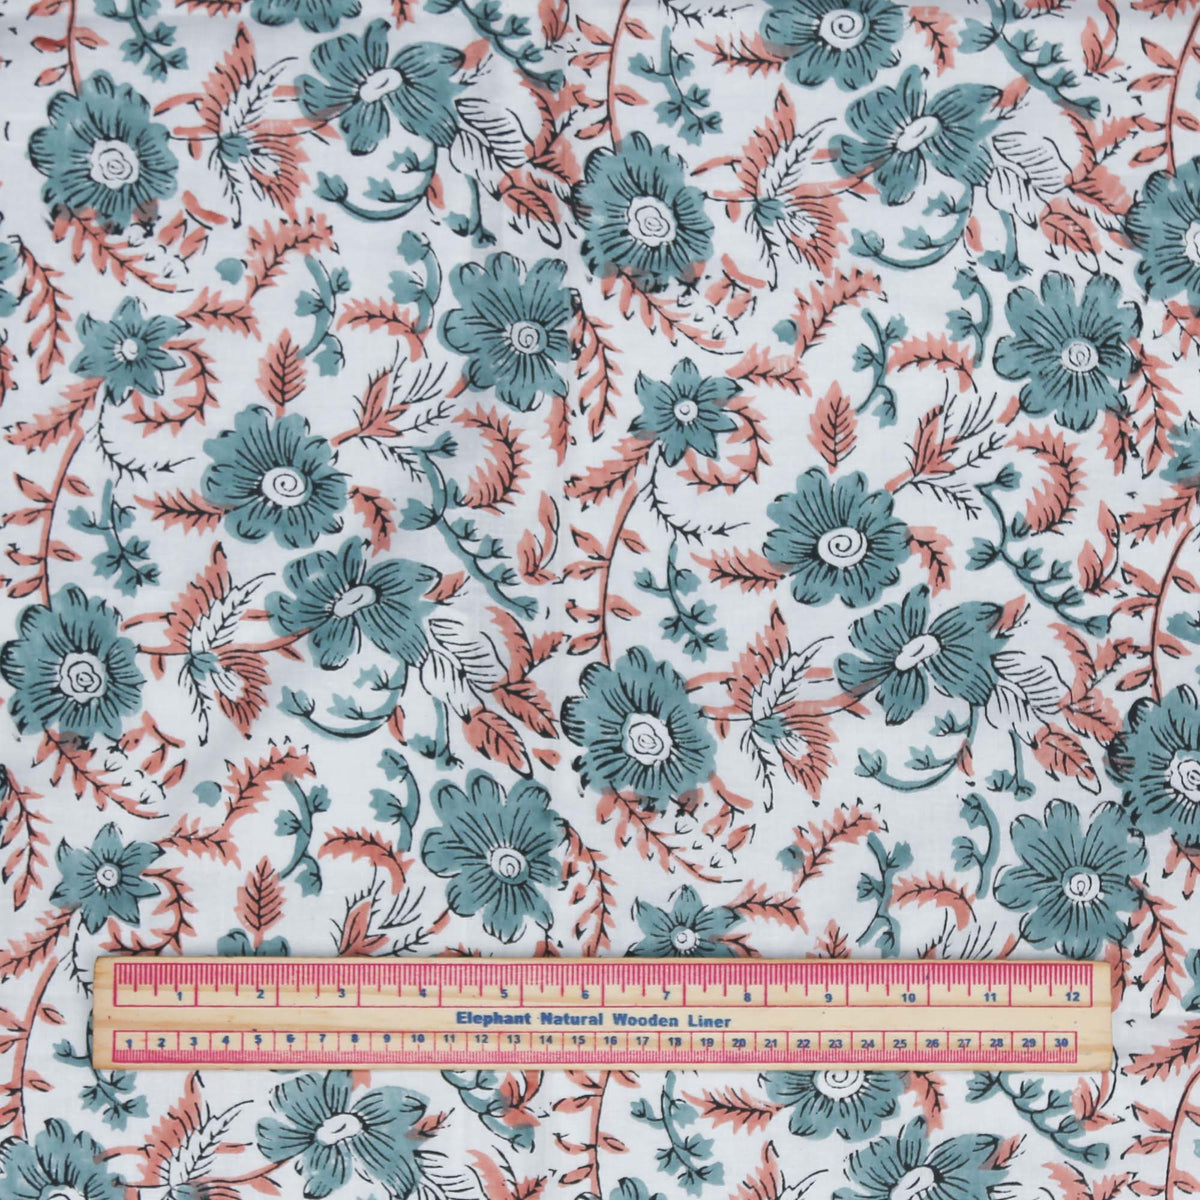 Block Printed 100% Cotton Fabric - Sweet Teal Rose Garden ( Design 450)